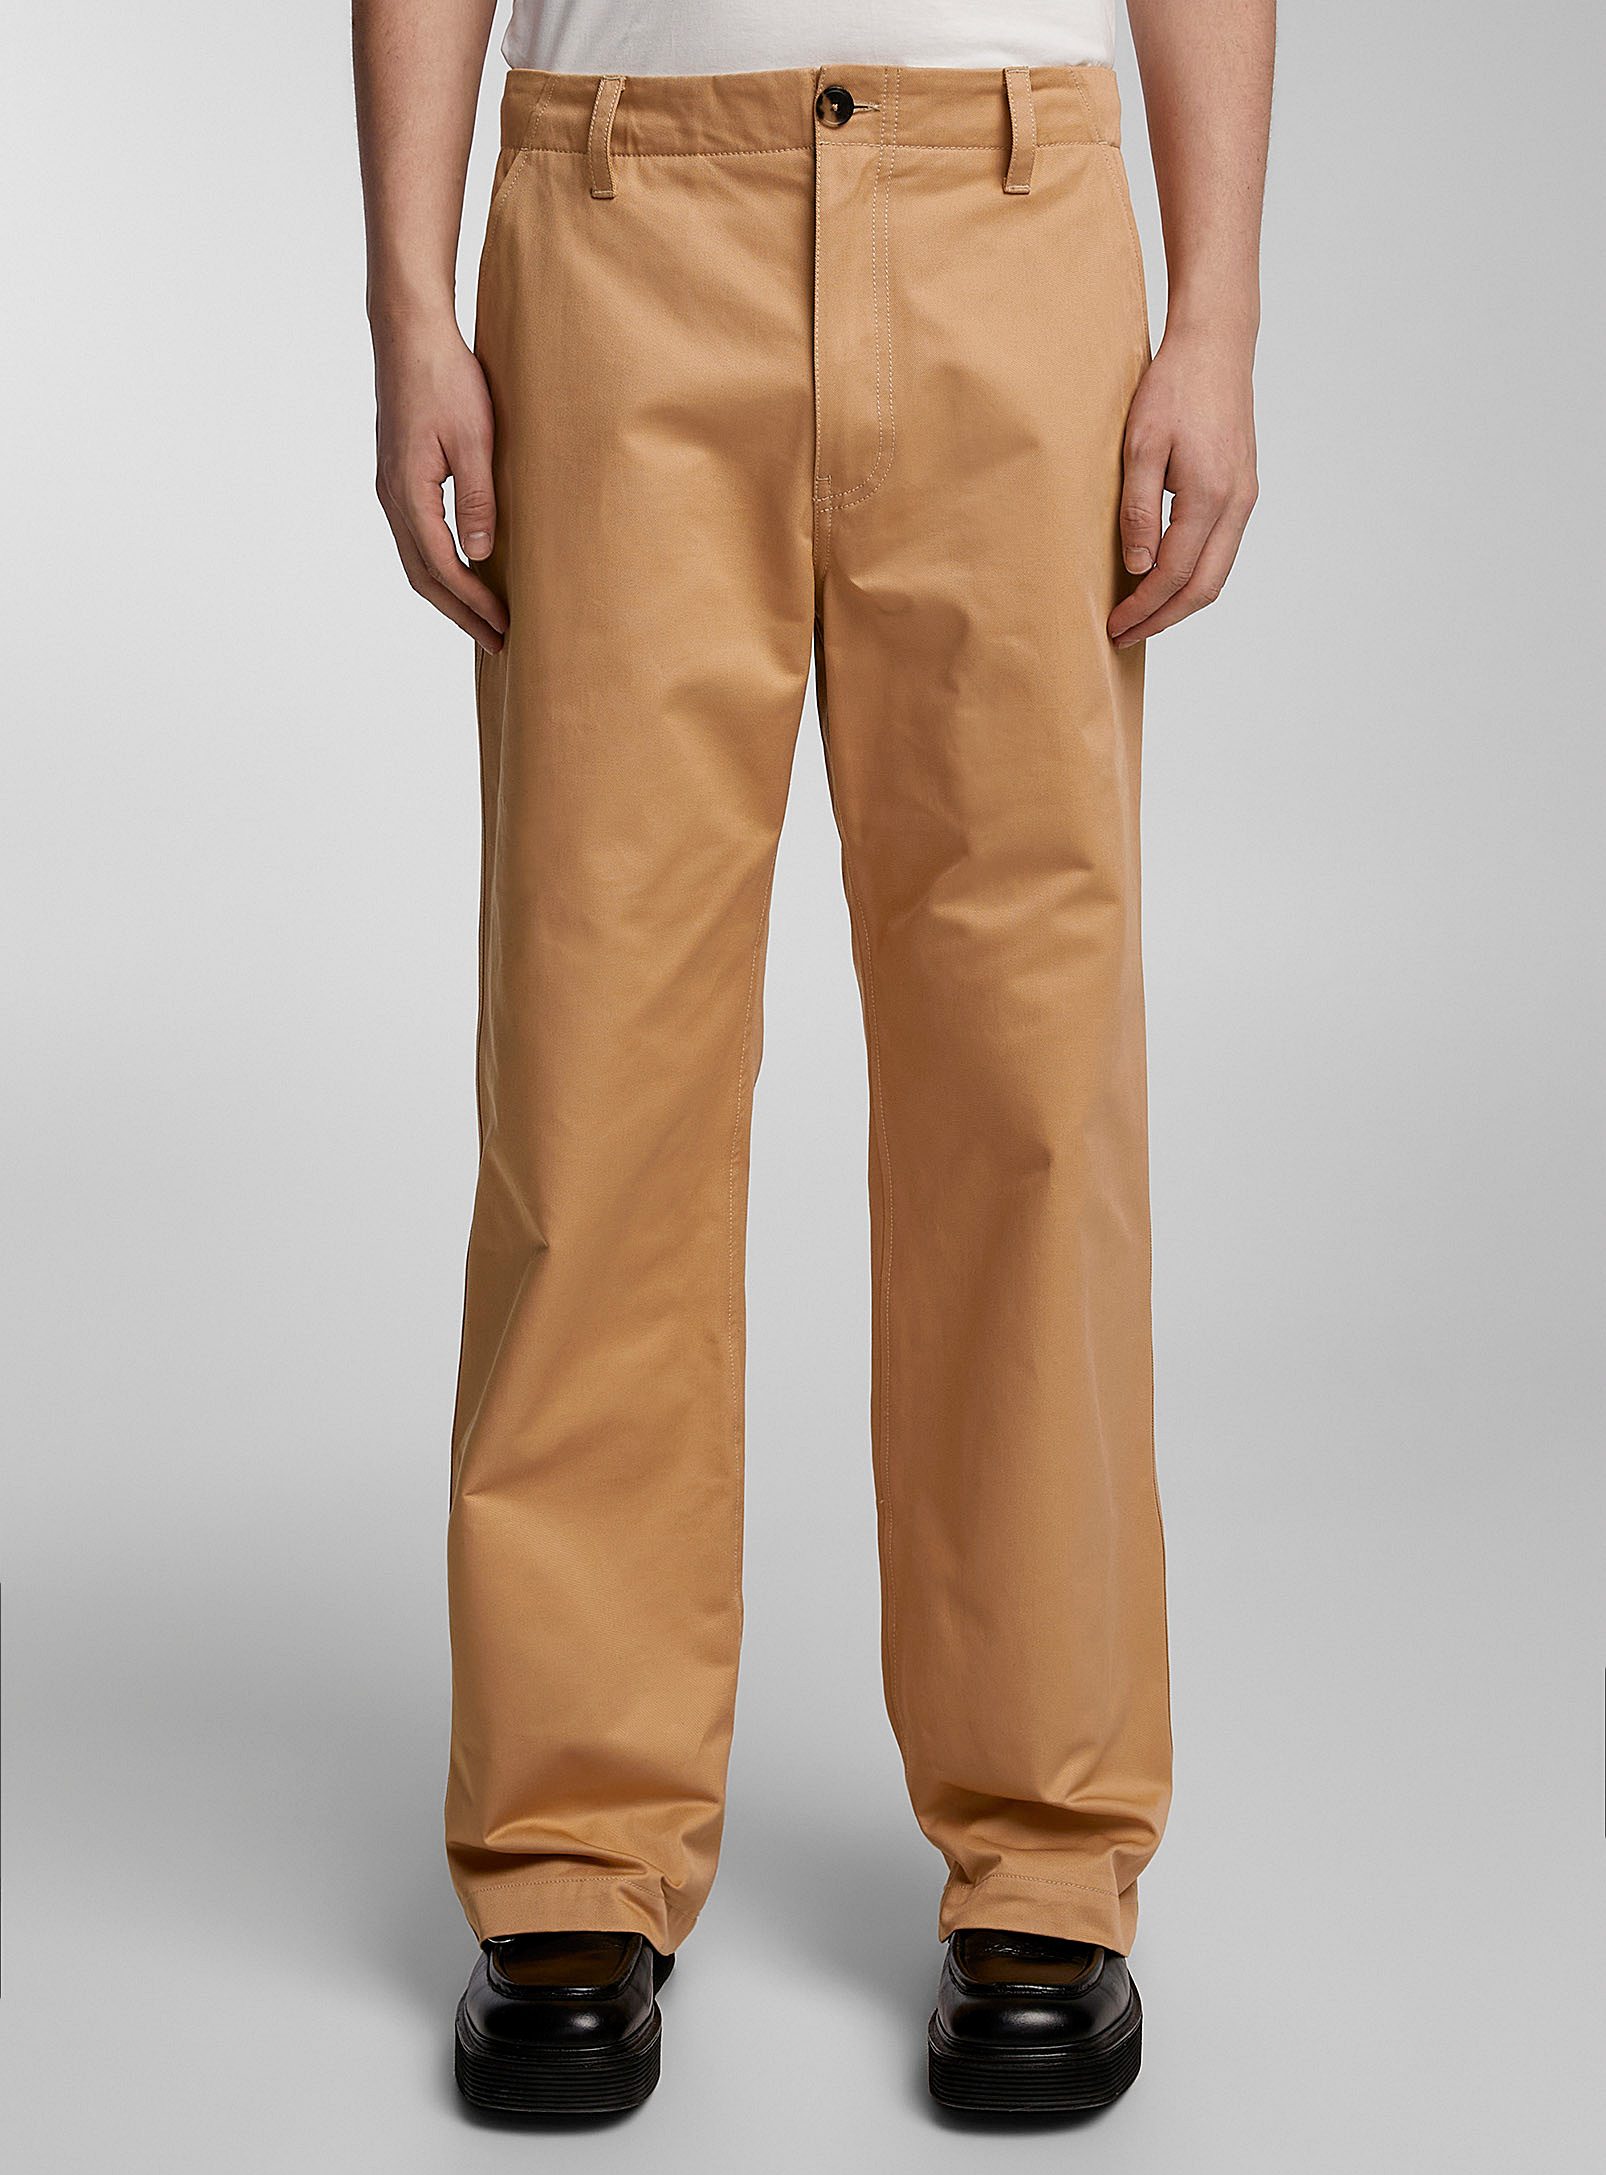 MARNI - Le pantalon droit twill coton